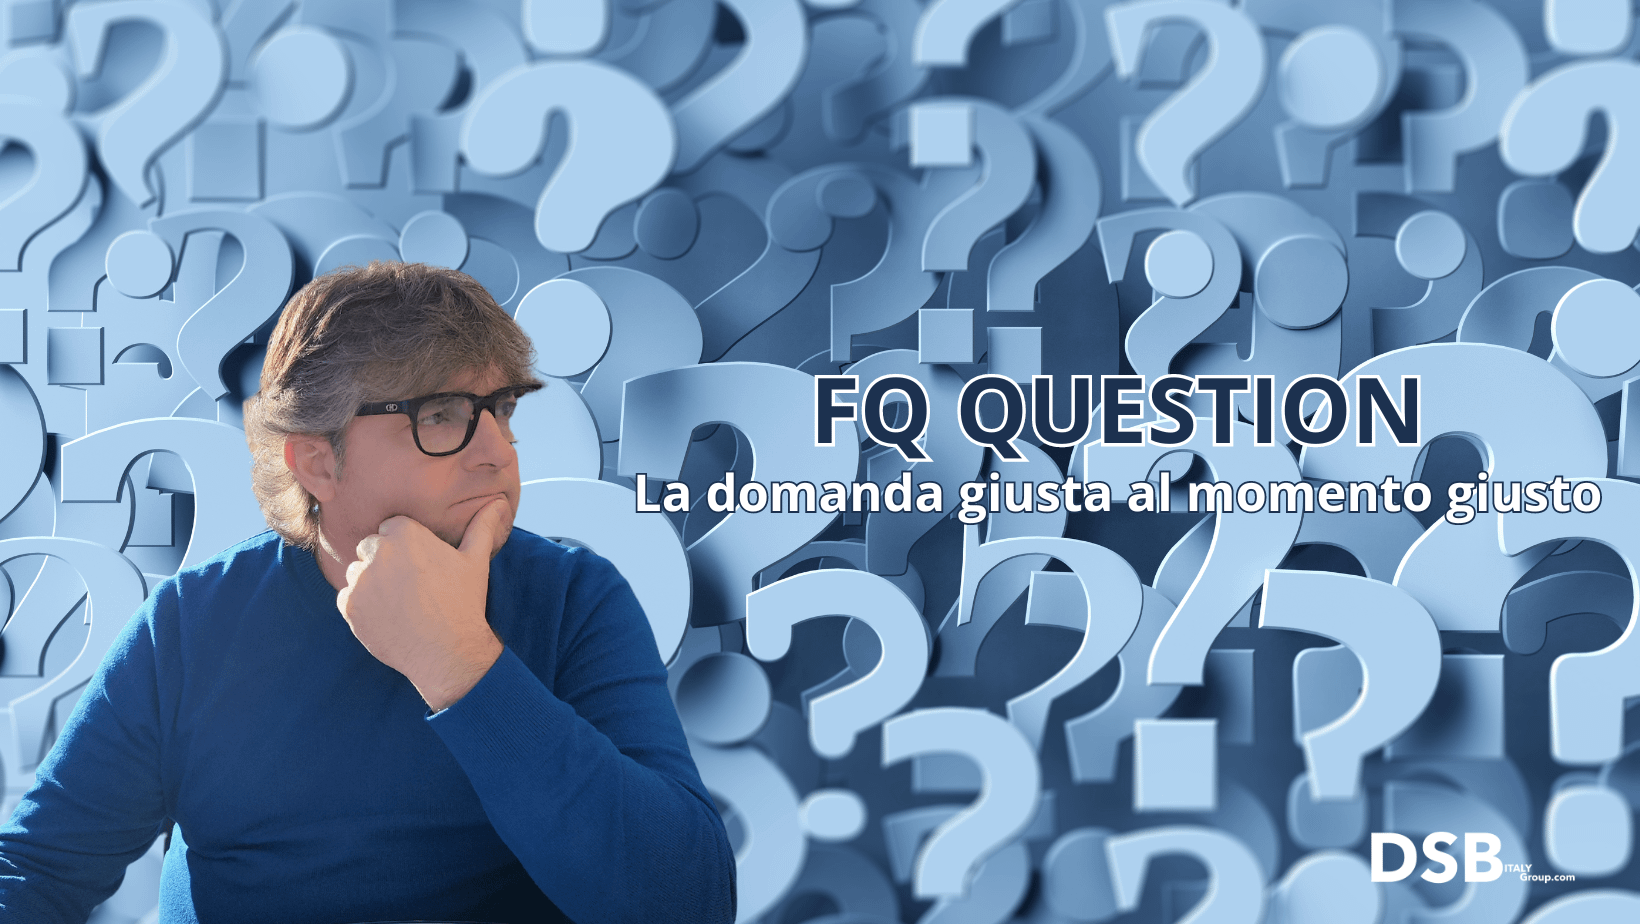 #FQ QUESTION